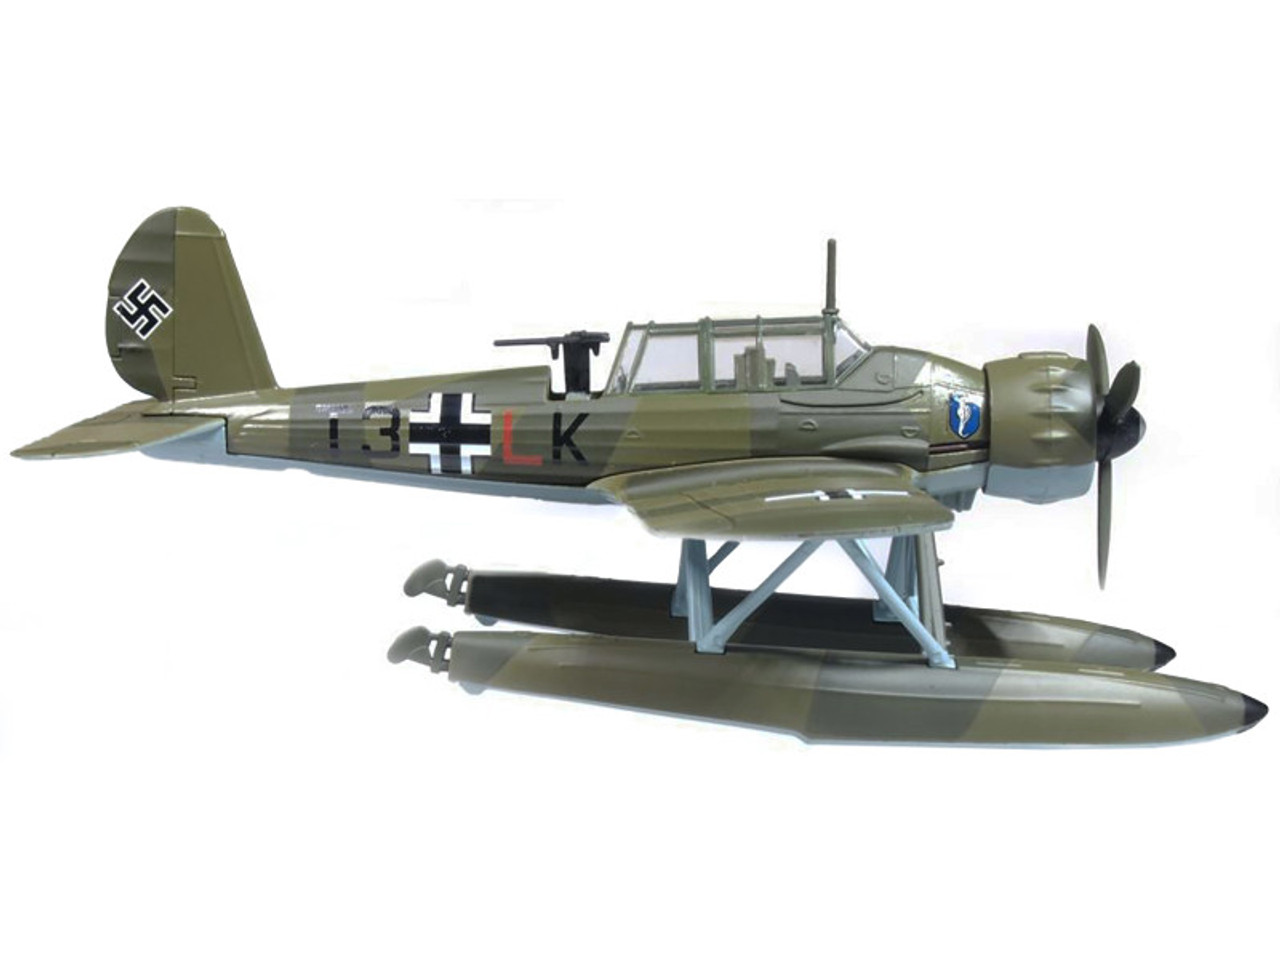 Arado Ar 196 A3 War Plane Bordflieger Staffel 196 Bismarck (1941) "Oxford Aviation" Series 1/72 Diecast Model Aircraft by Oxford Diecast